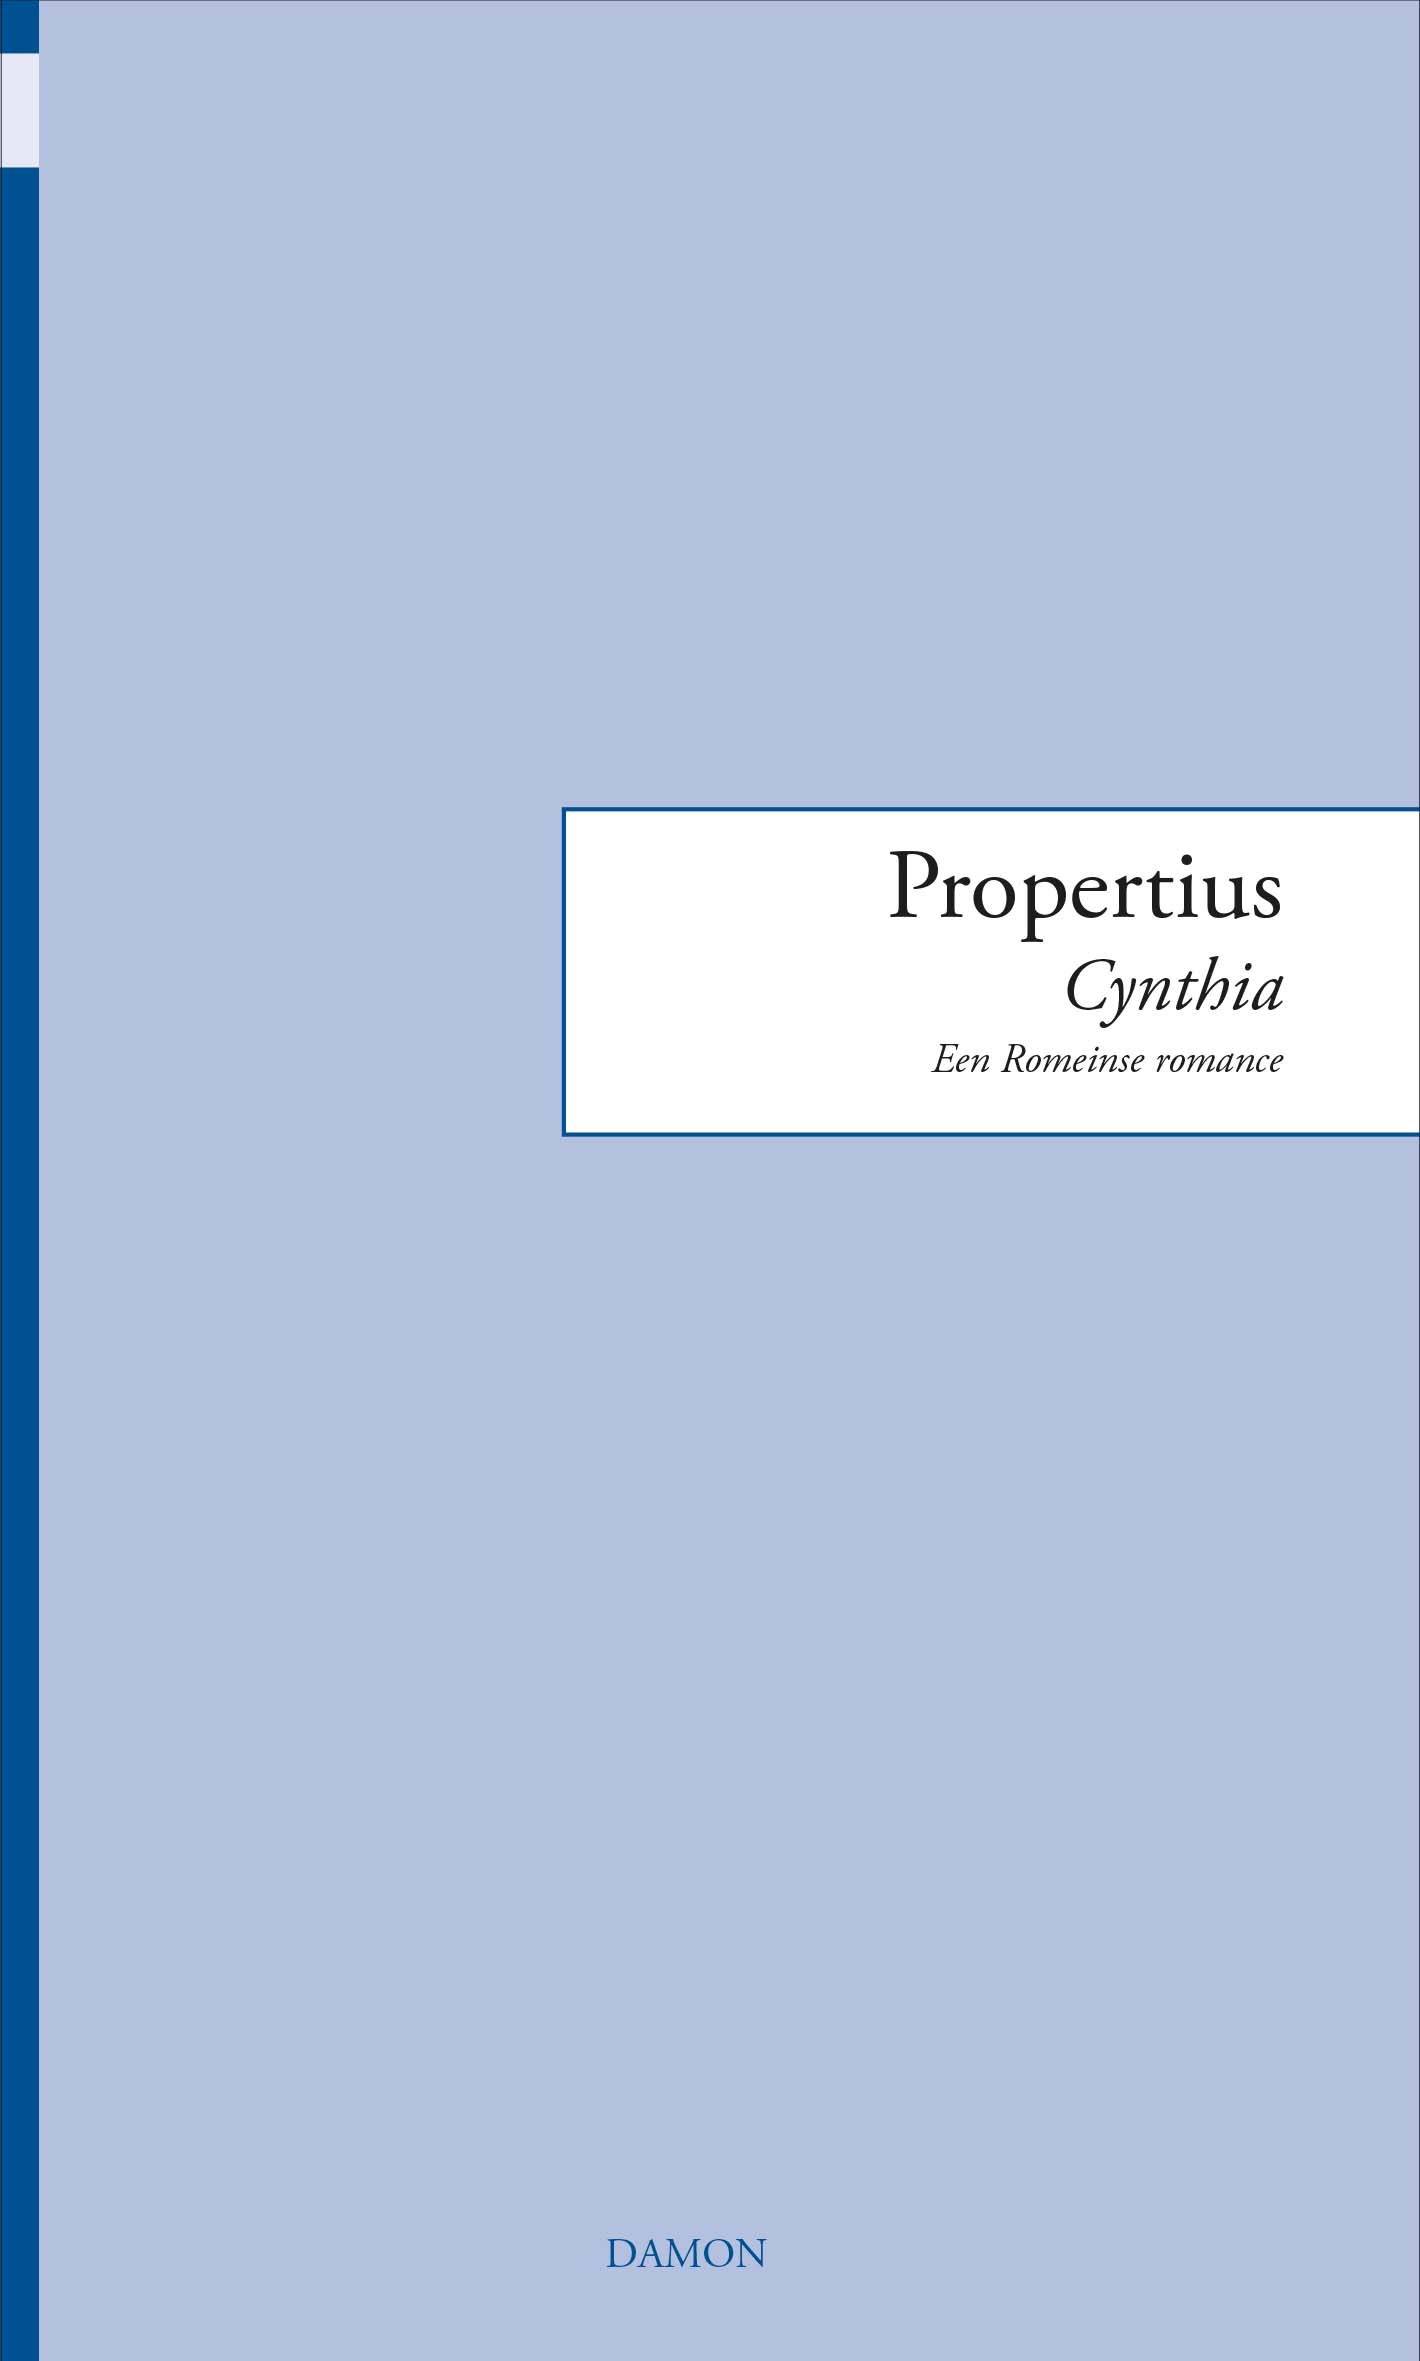 Propertius - Cynthia, Een Romeinse romance cover